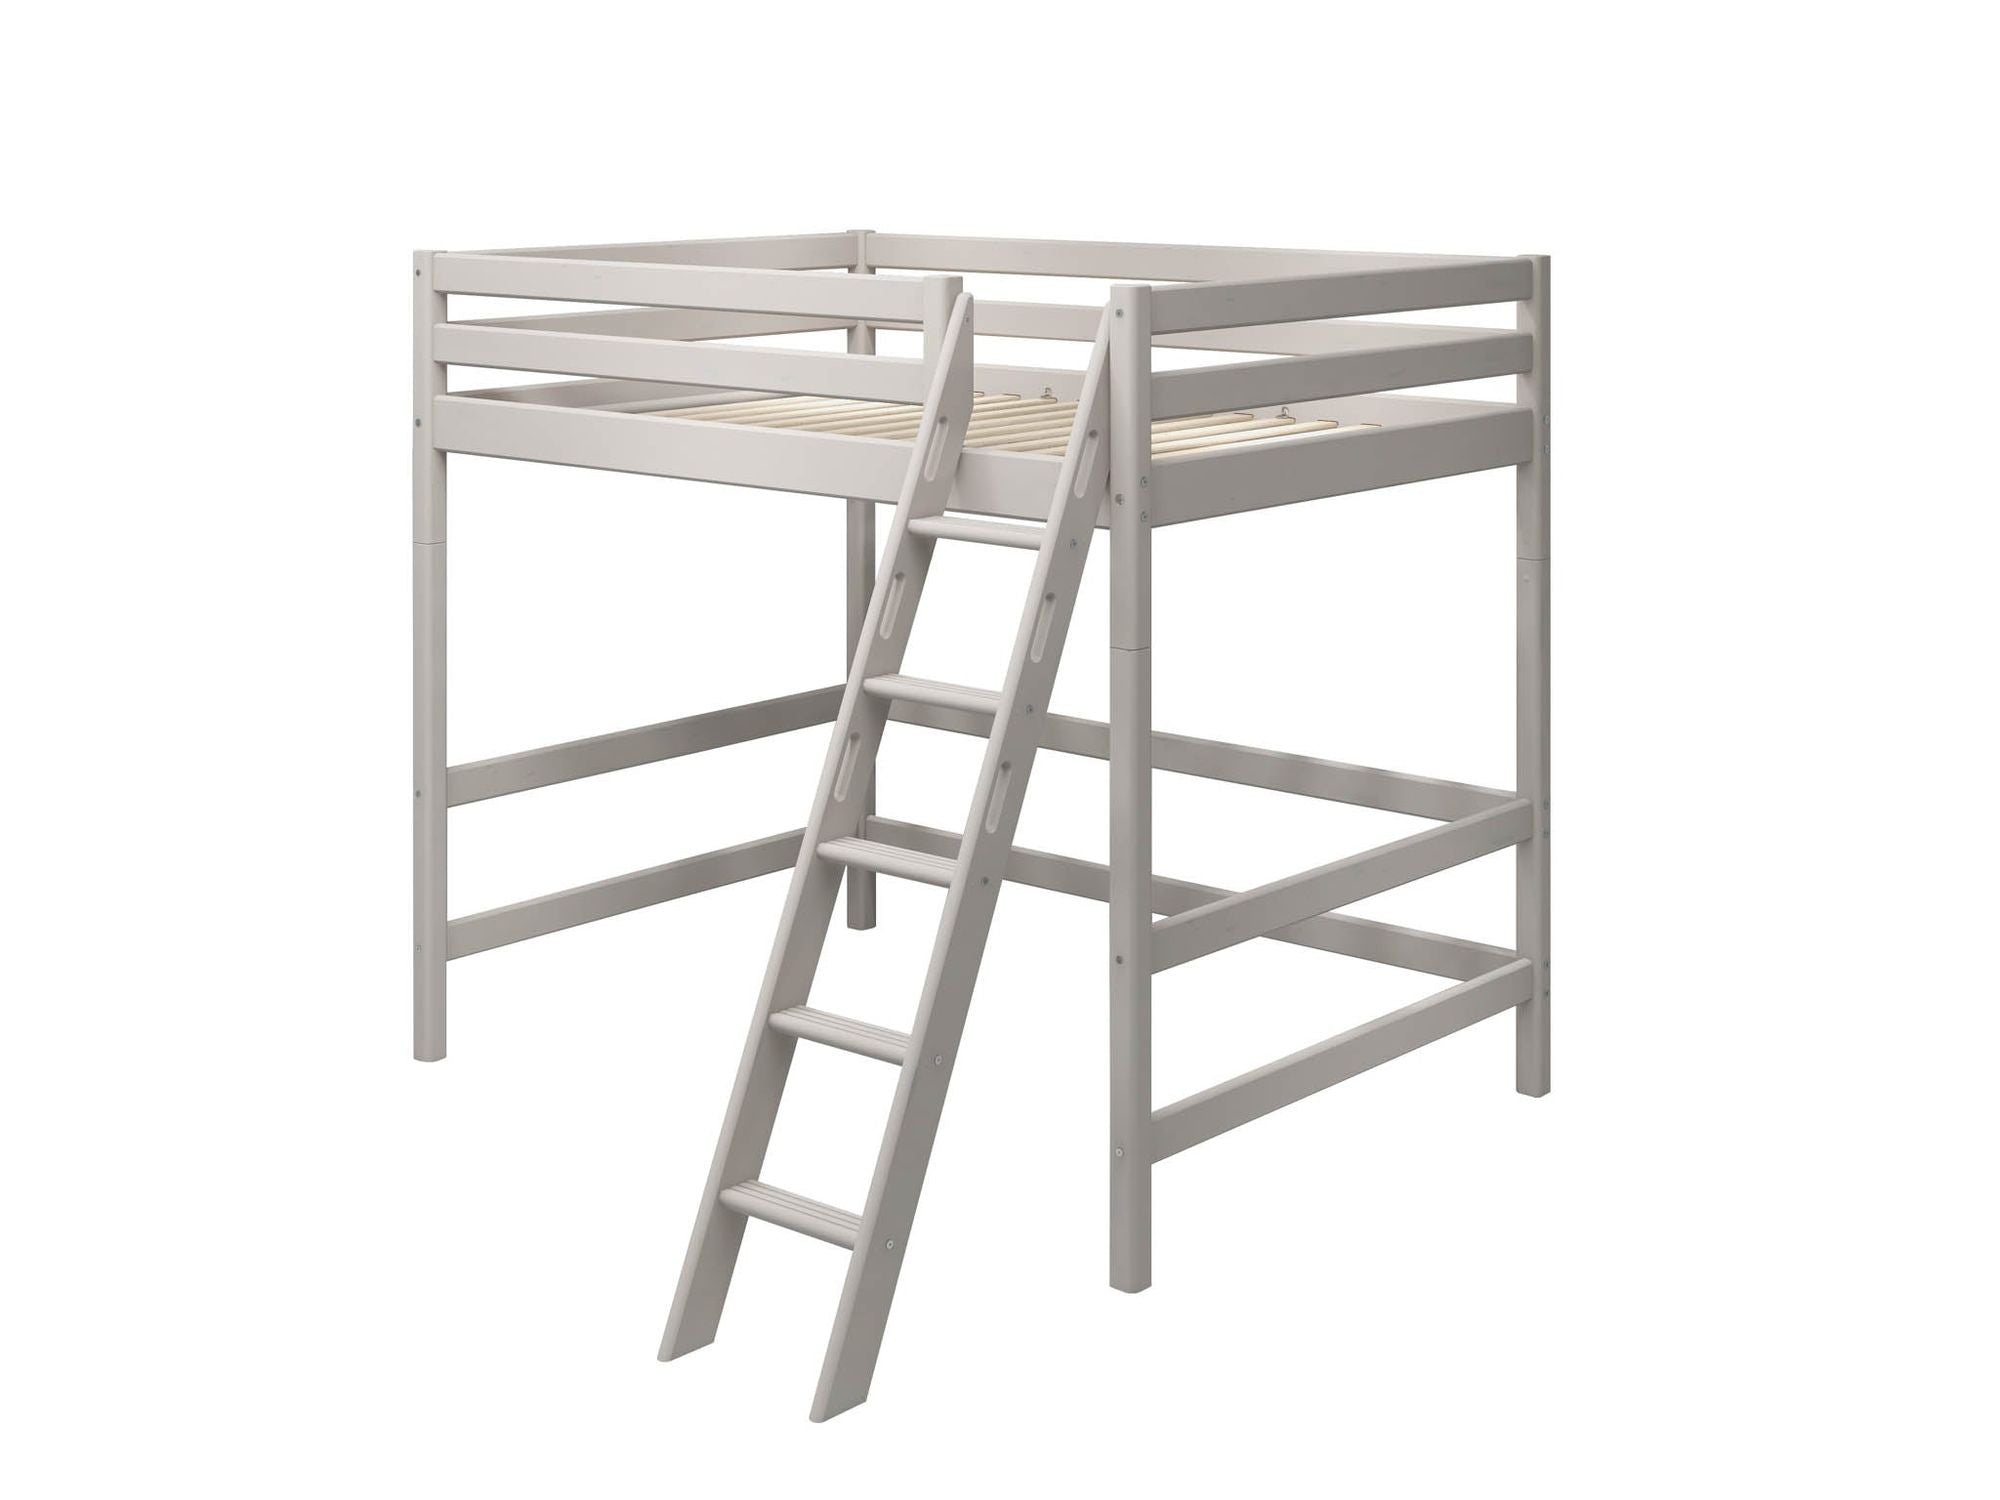 FLEXA High bed with slanting ladder